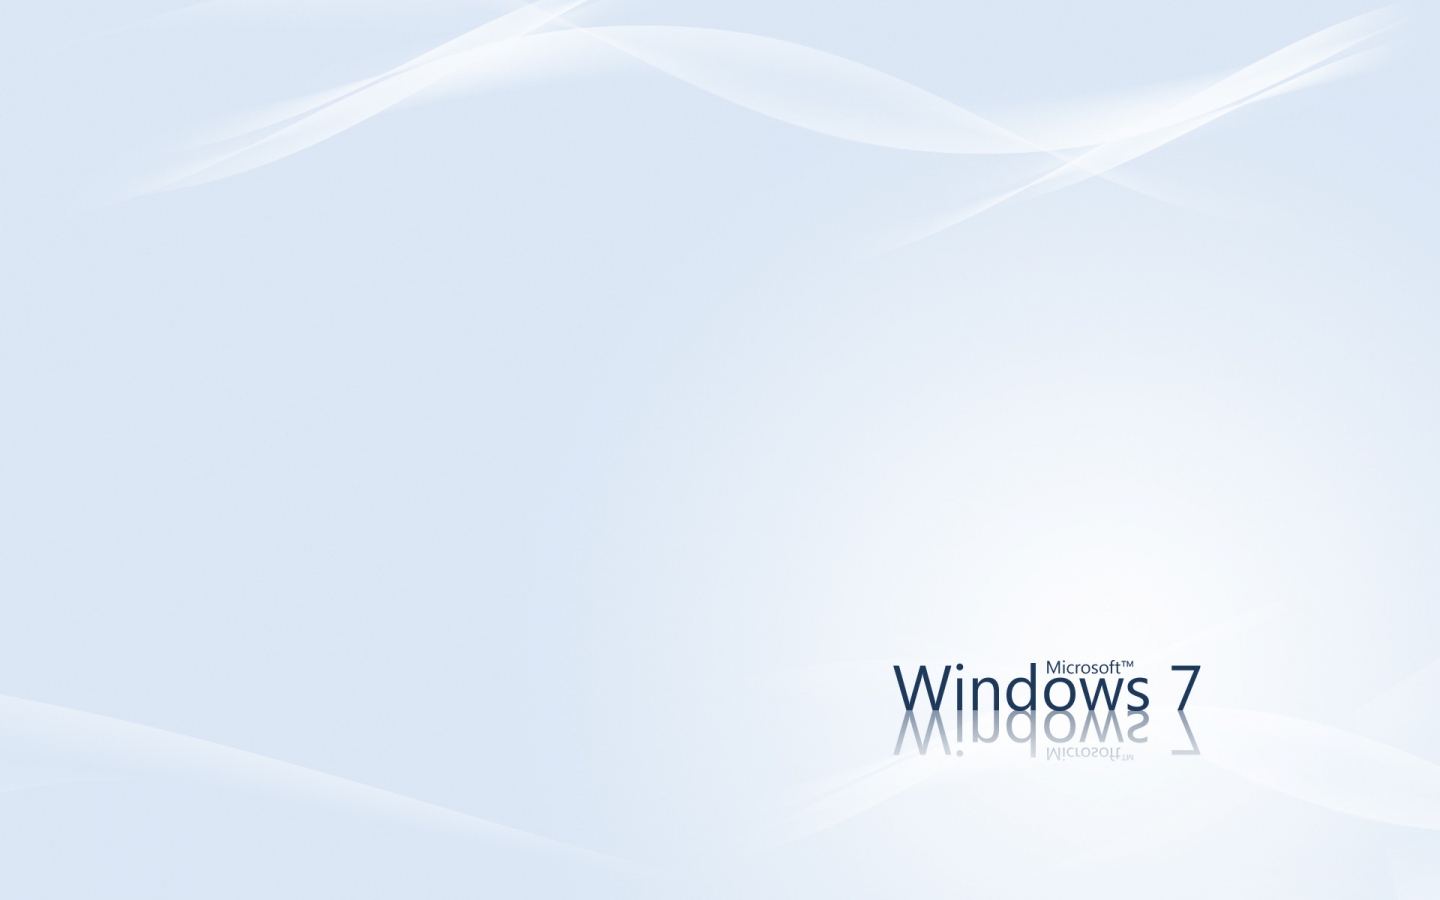 Windows 7 Bright for 1440 x 900 widescreen resolution